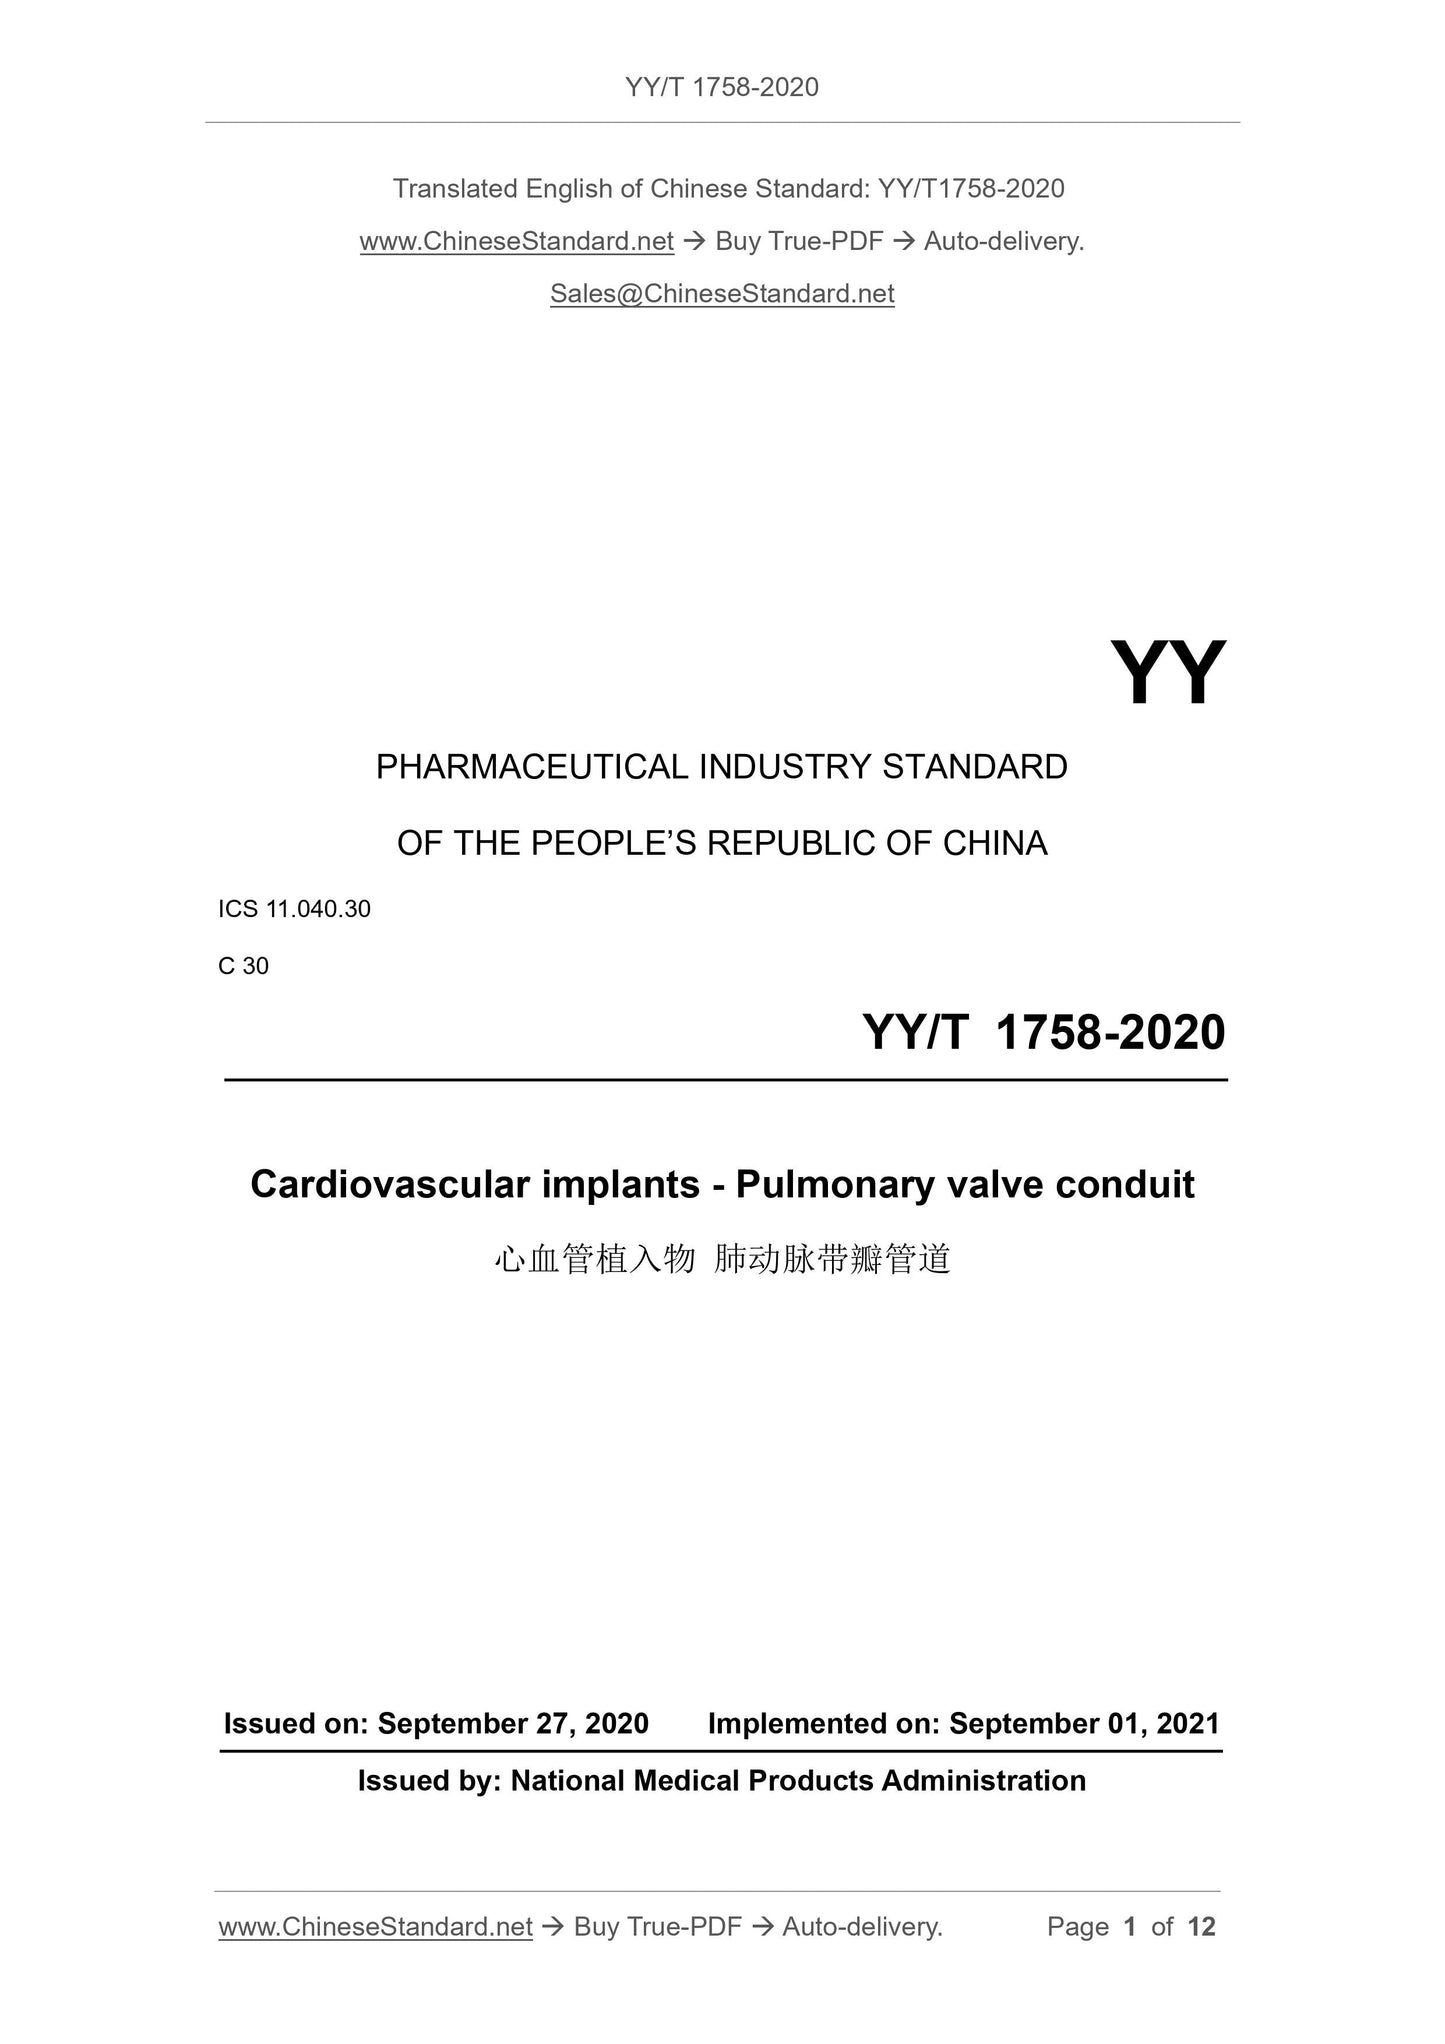 YY/T 1758-2020 Page 1